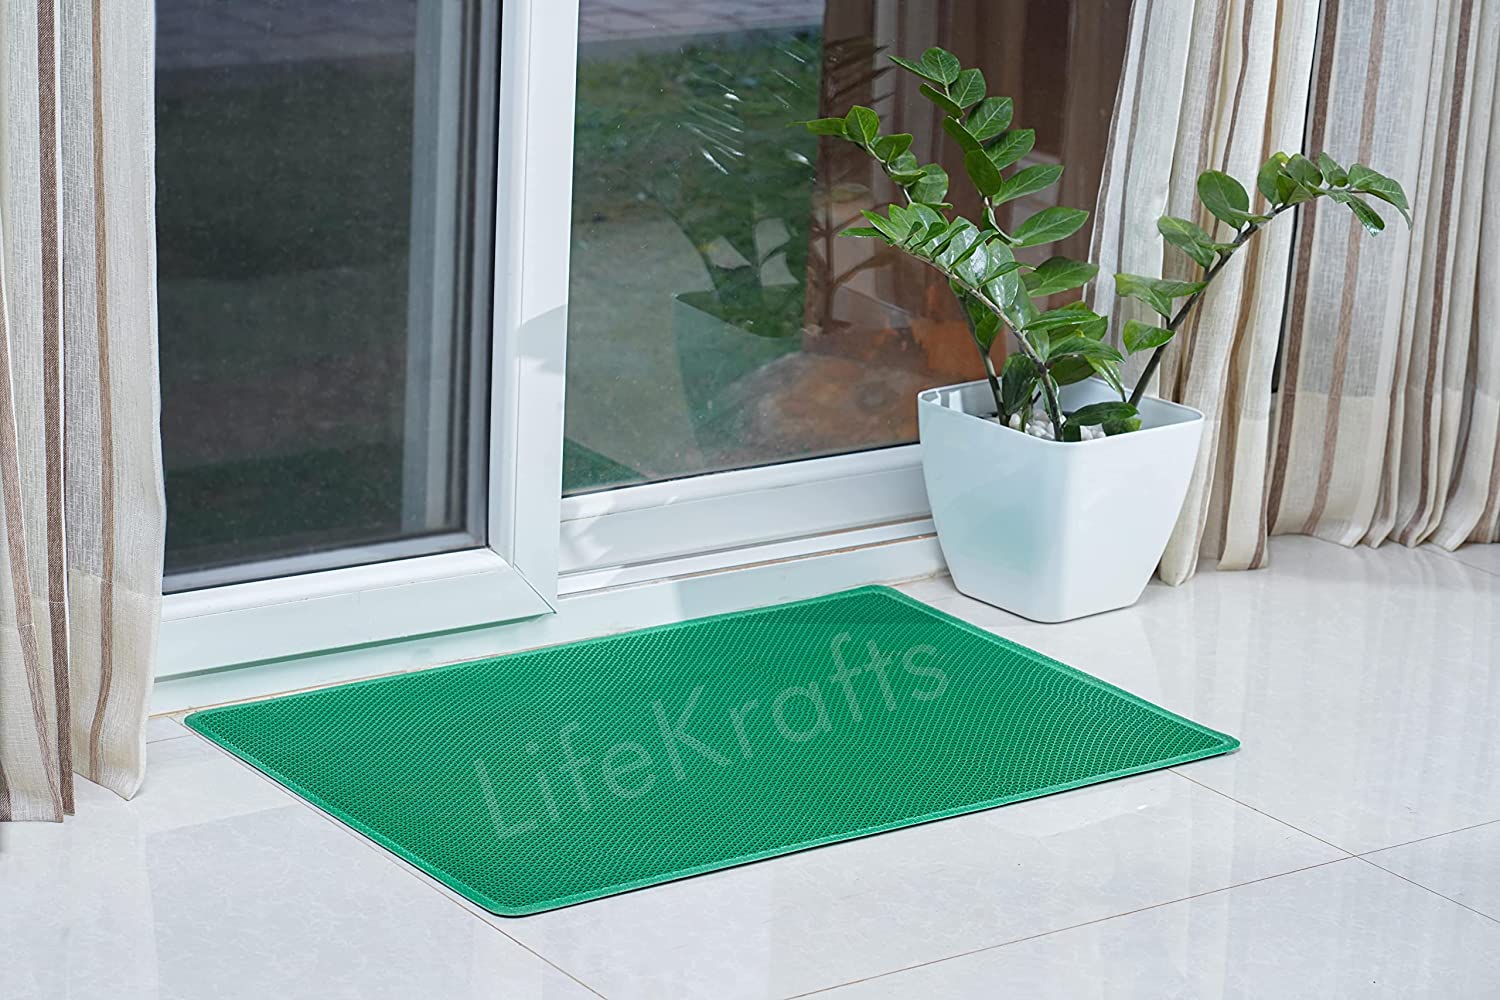 Anti-Skid Mat: Multipurpose Commercial PVC Floor Mat- Green